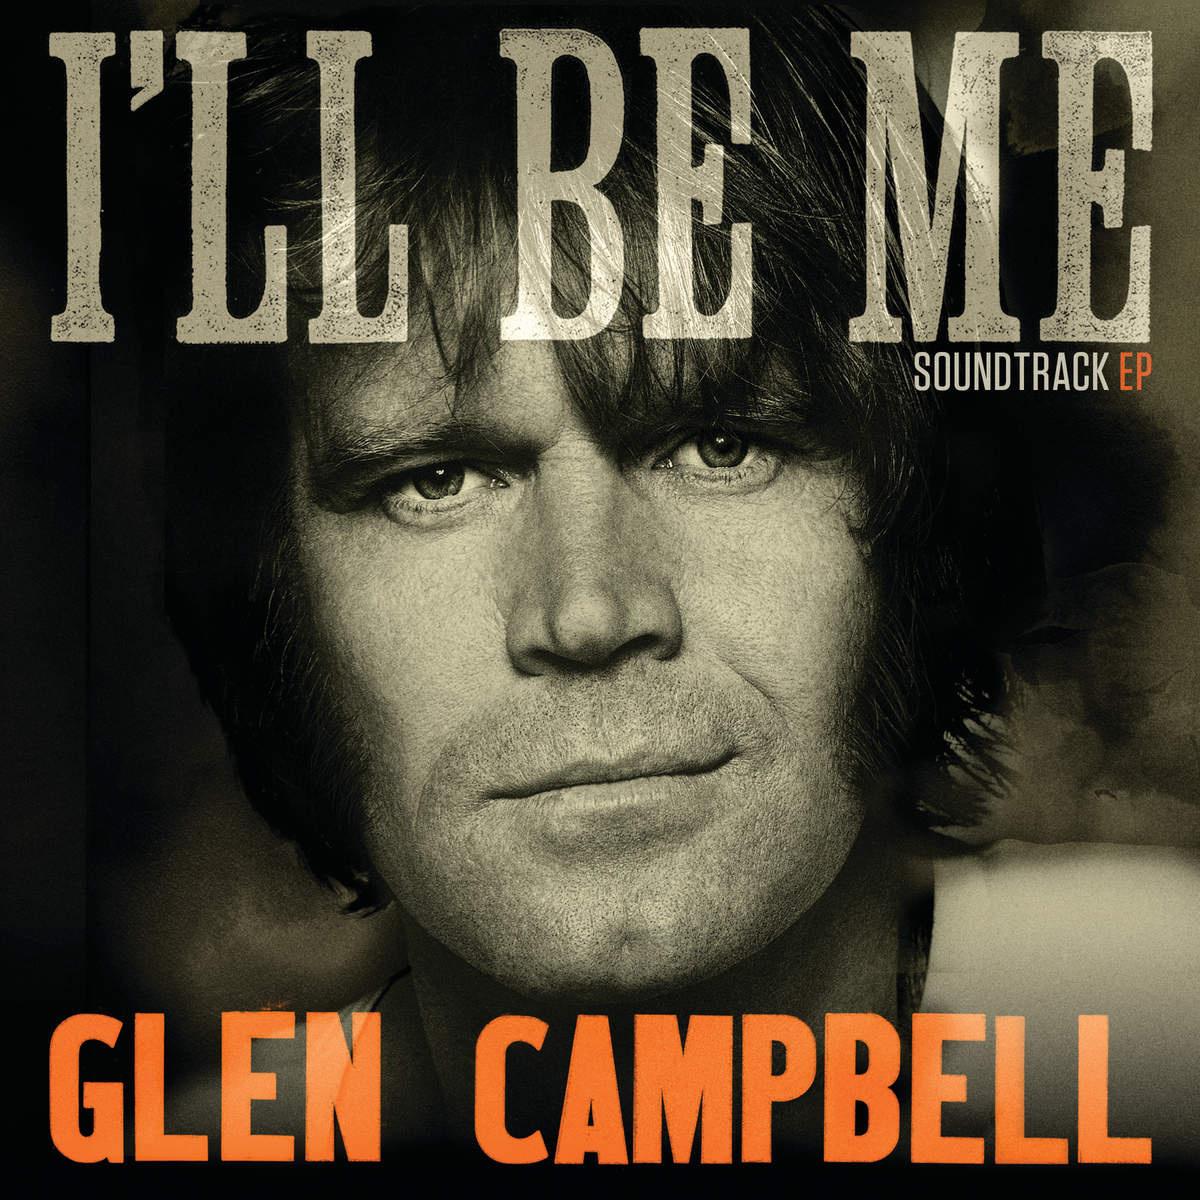 Glen Campbell I'll Be Me Soundtrack EP专辑